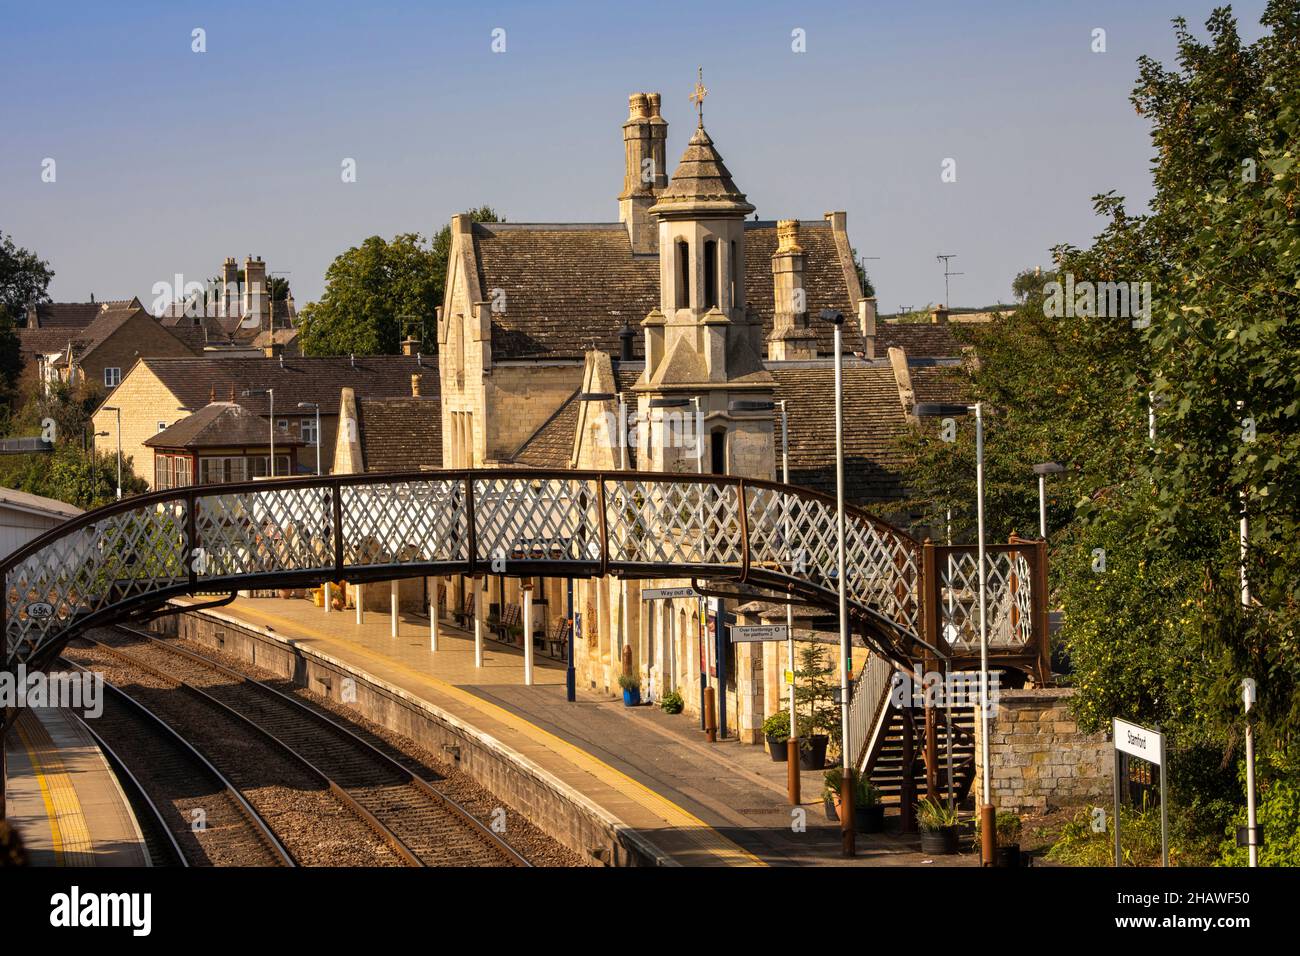 UK, England, Lincolnshire Stamford, Railway Station modelled on Burghley House Stock Photo